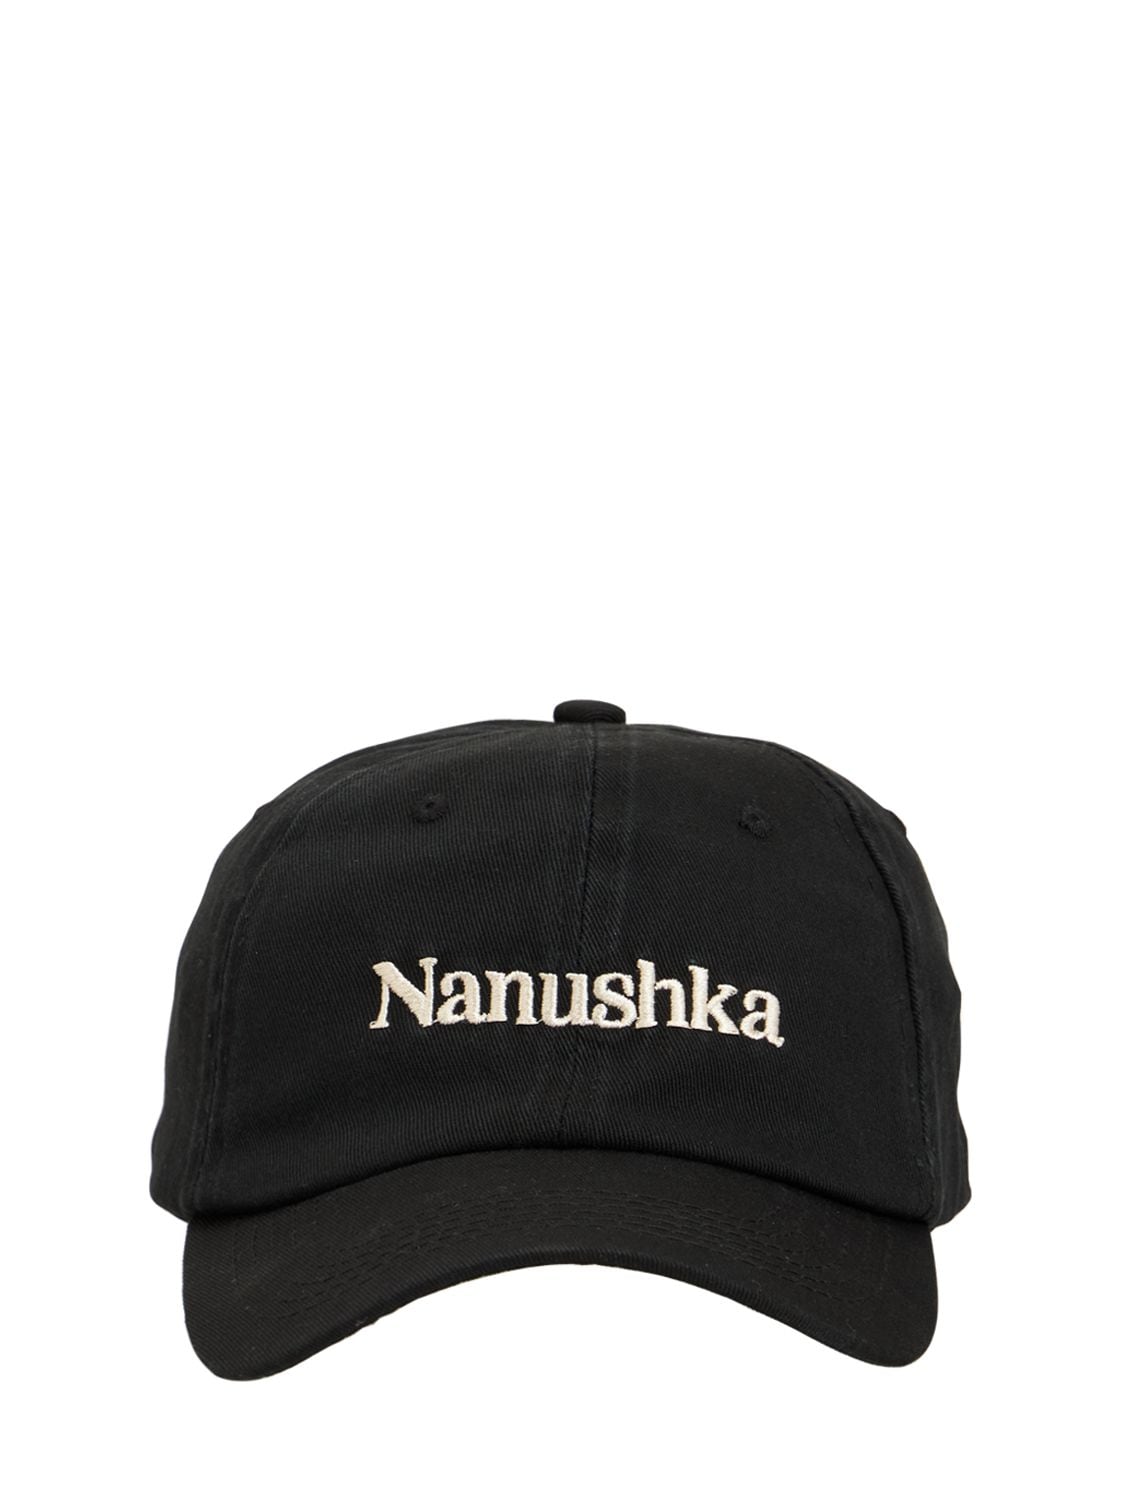 NANUSHKA VAL ORGANIC COTTON TWILL BASEBALL CAP